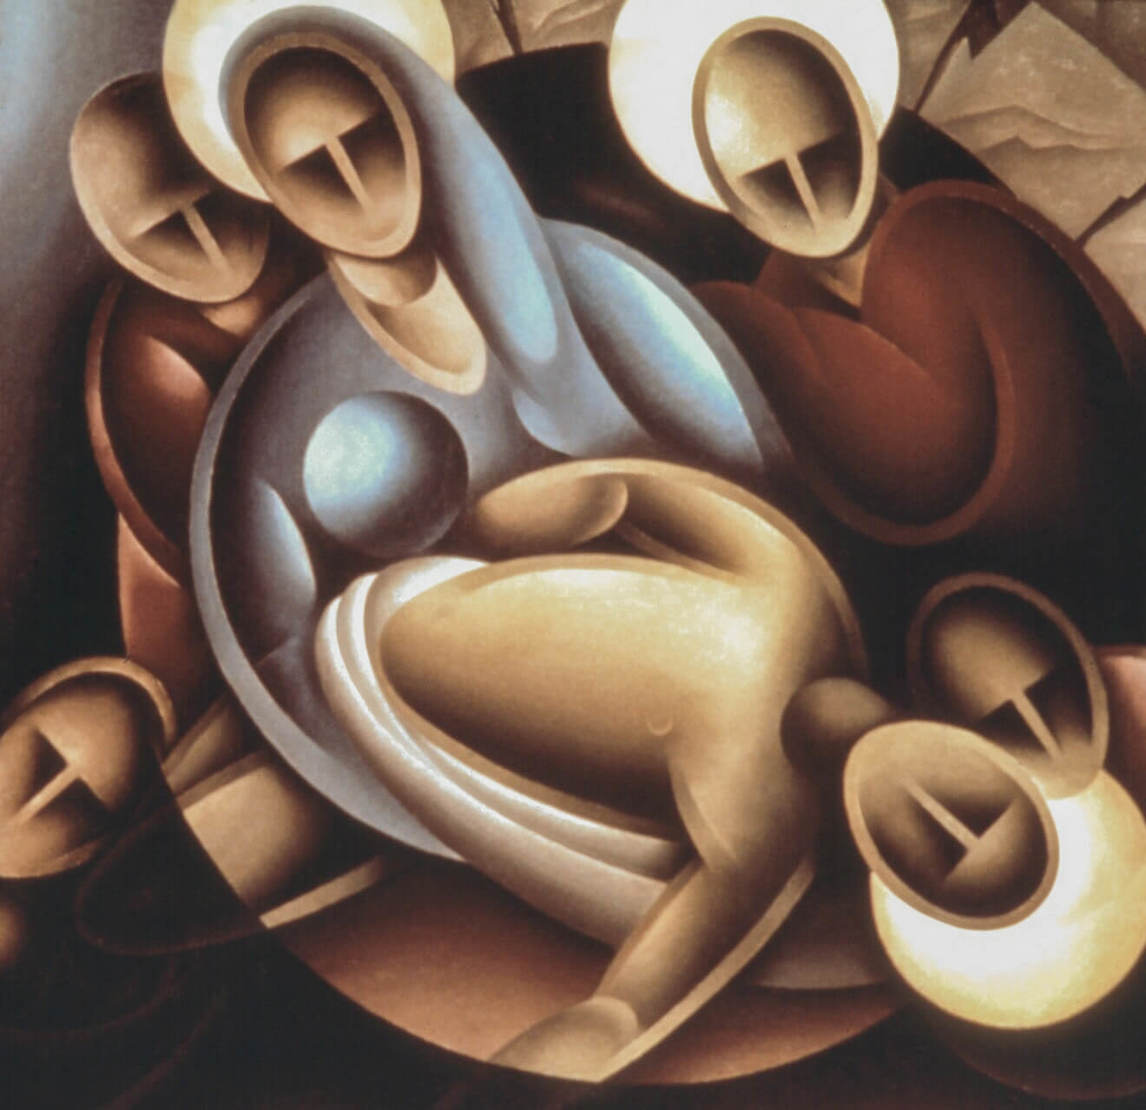  Entombment (Enterrement), 1937